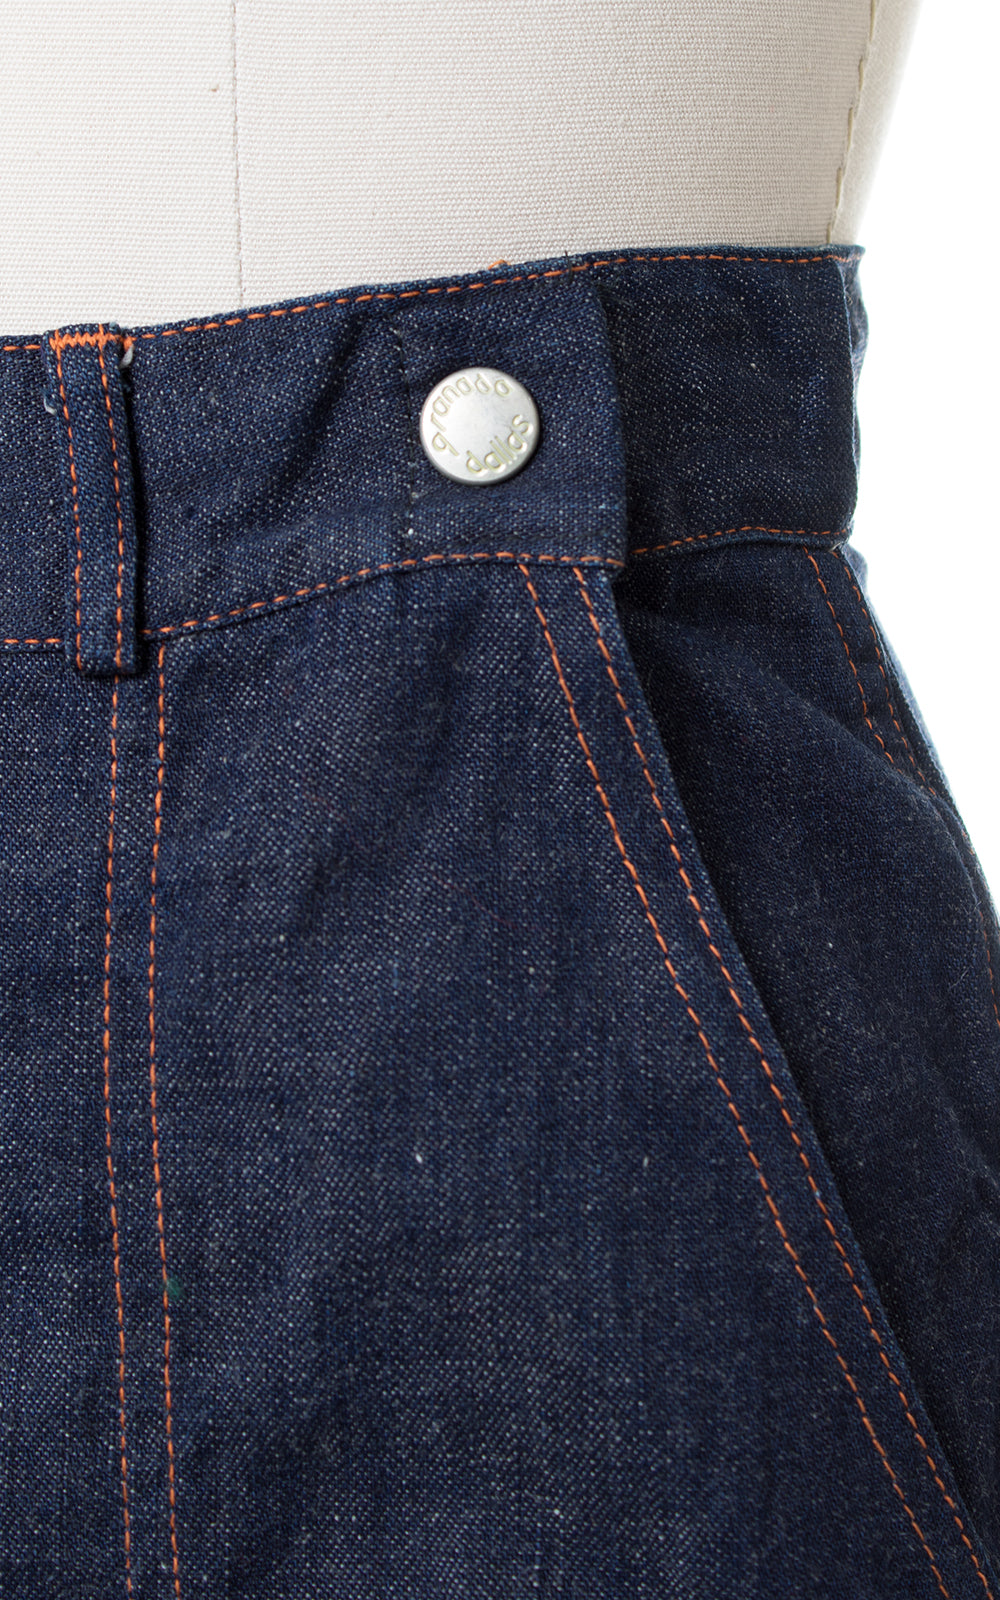 1950s Plaid Cuff Dark Denim Jeans